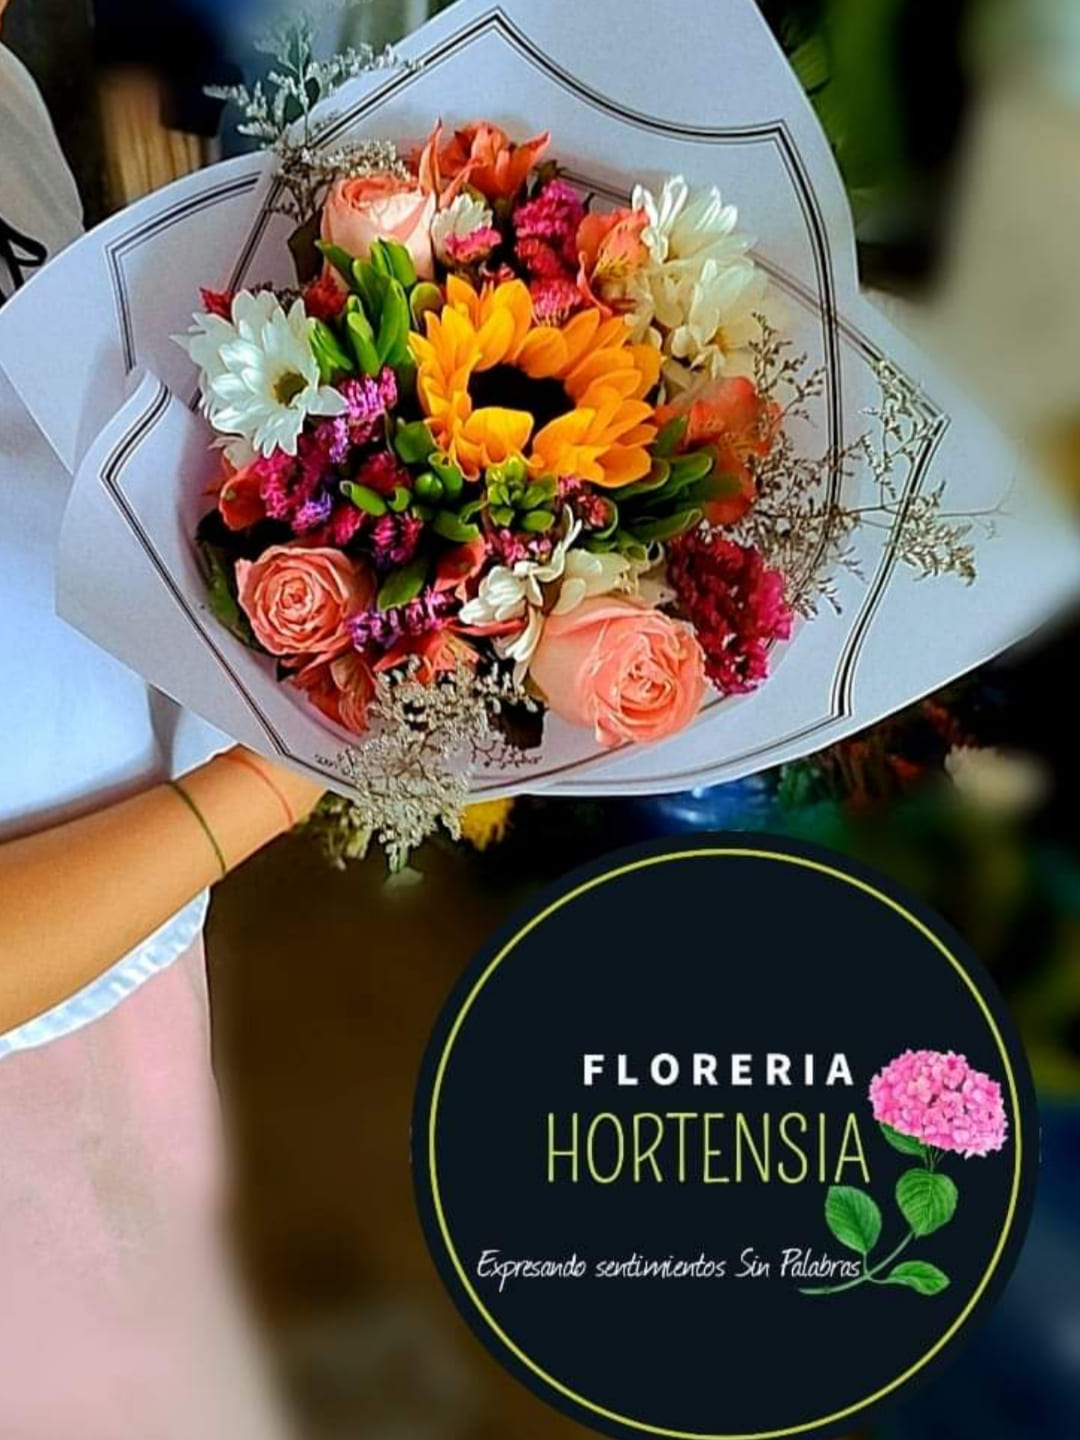 Floreria Hortensia